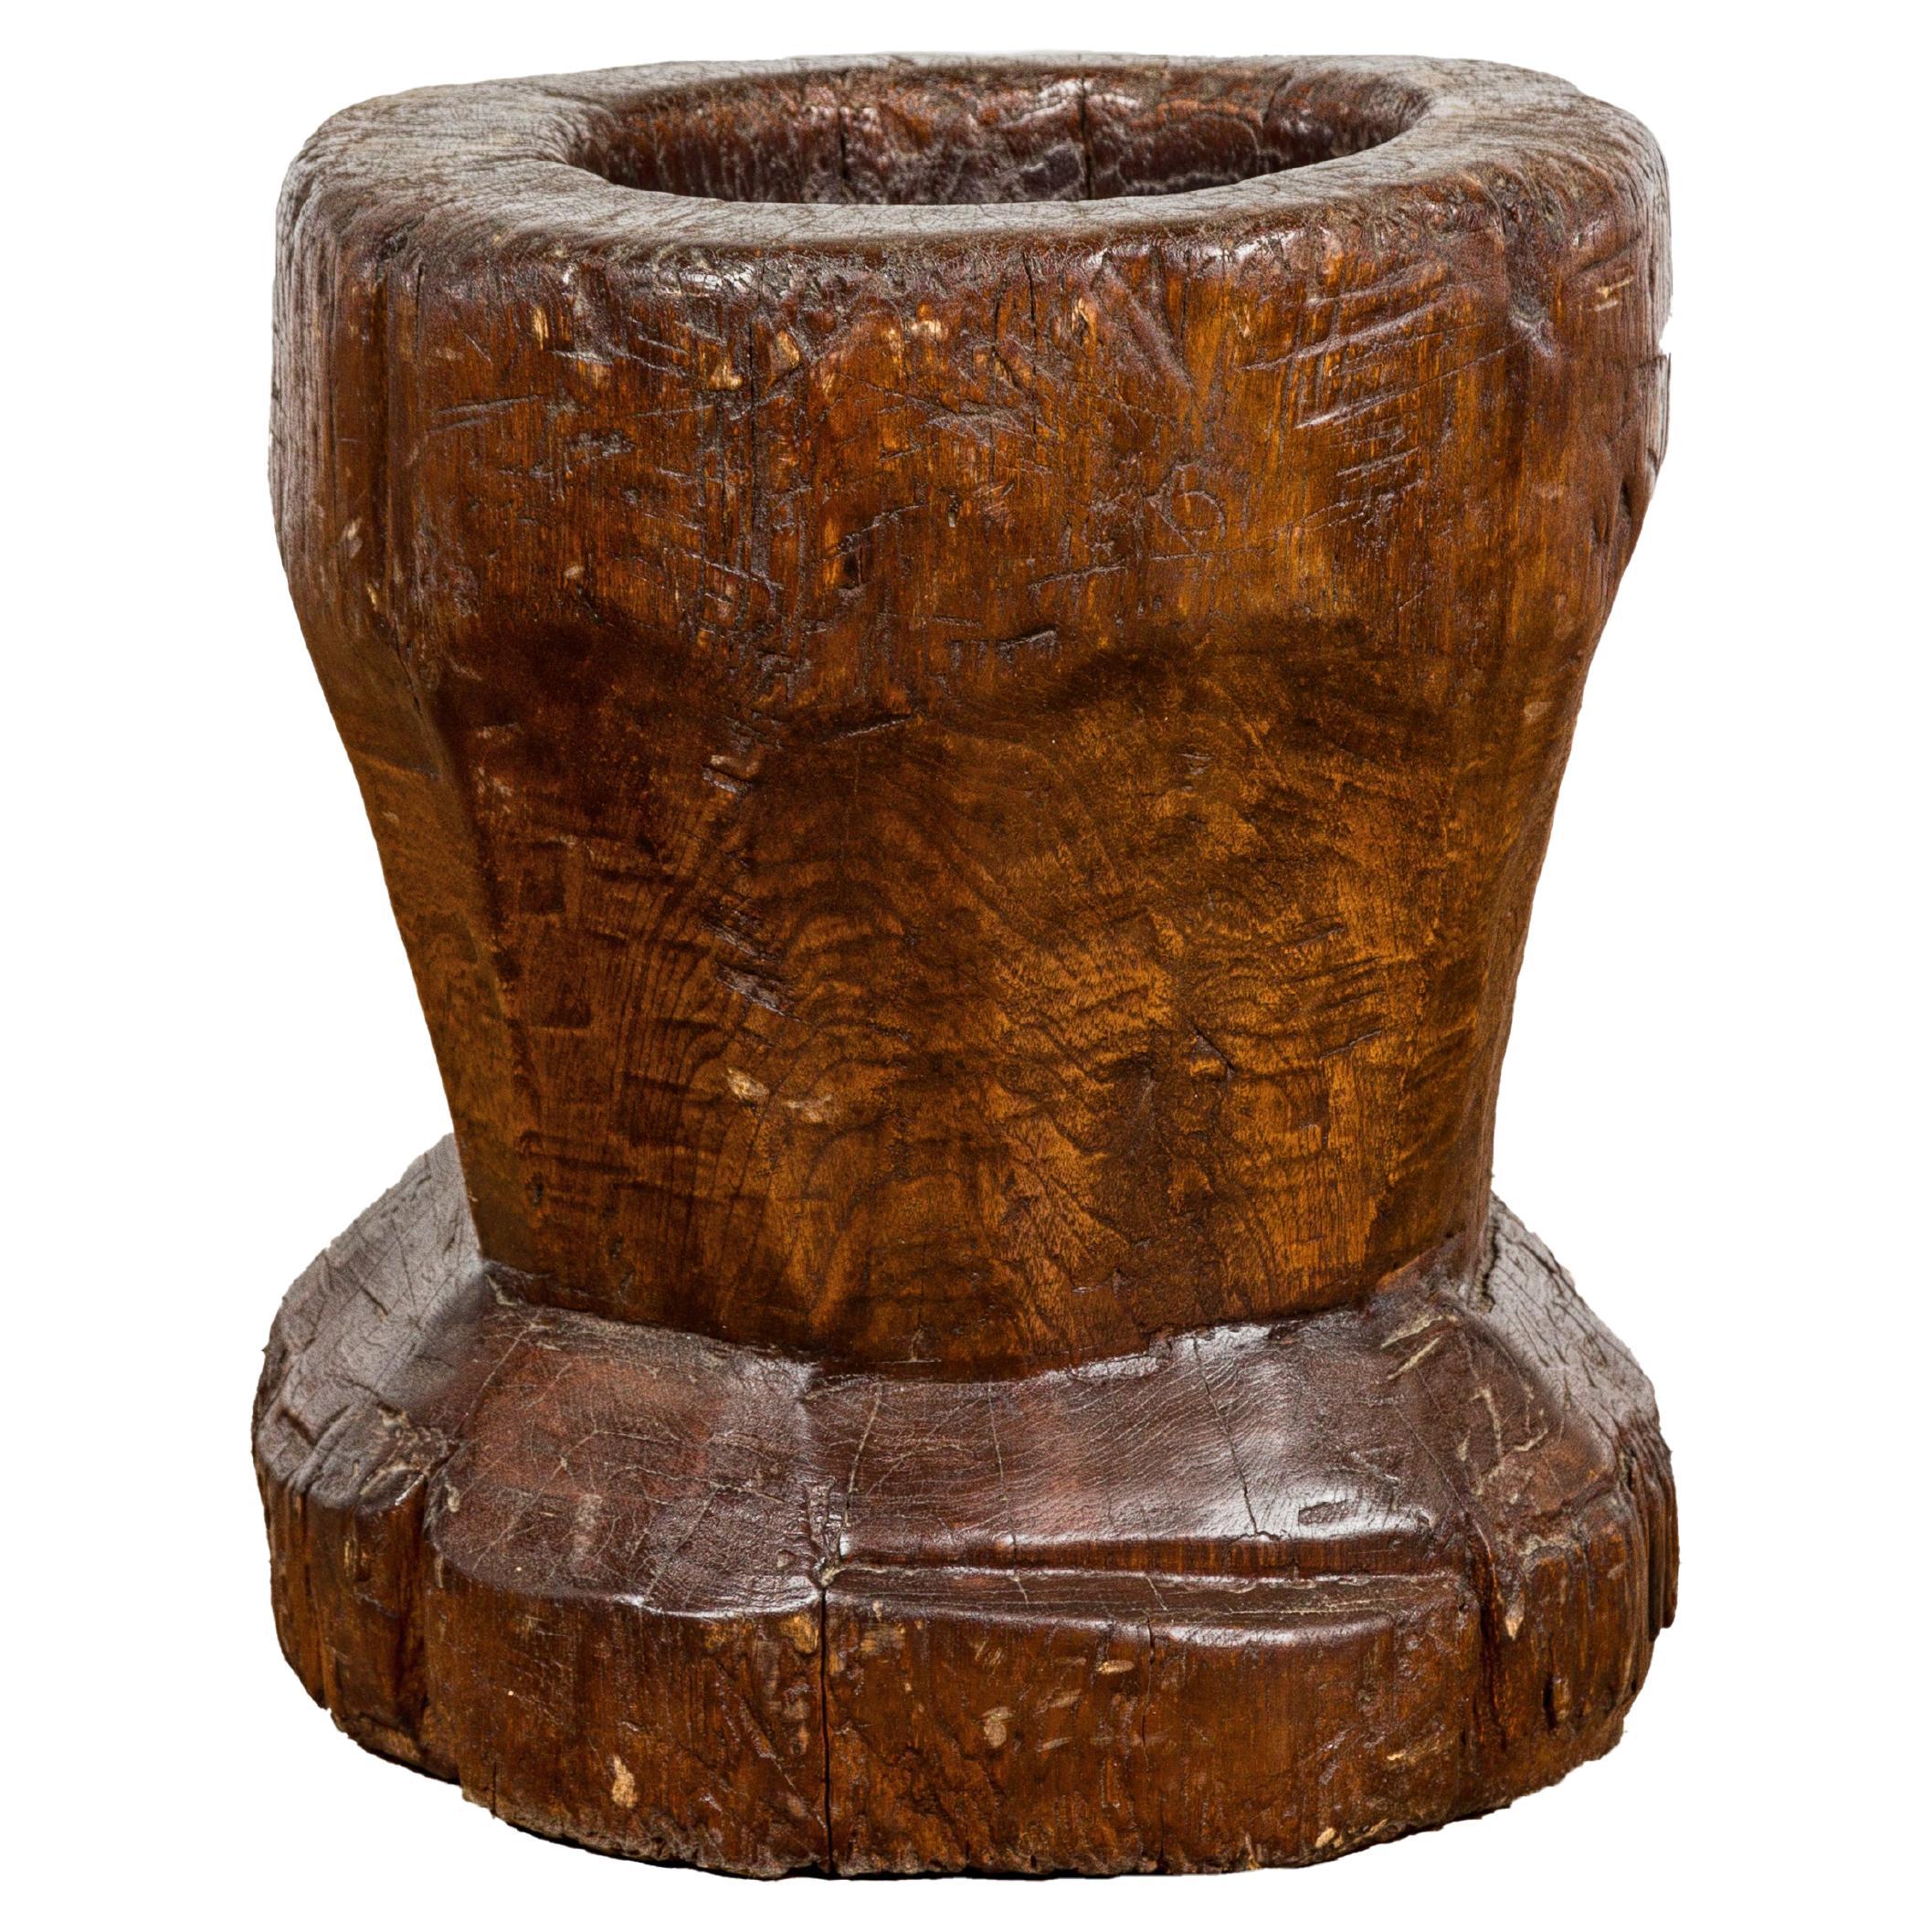 19th Century Rustic Teak Wood Mortar Urn, Antique Planter for Vintage Home Decor